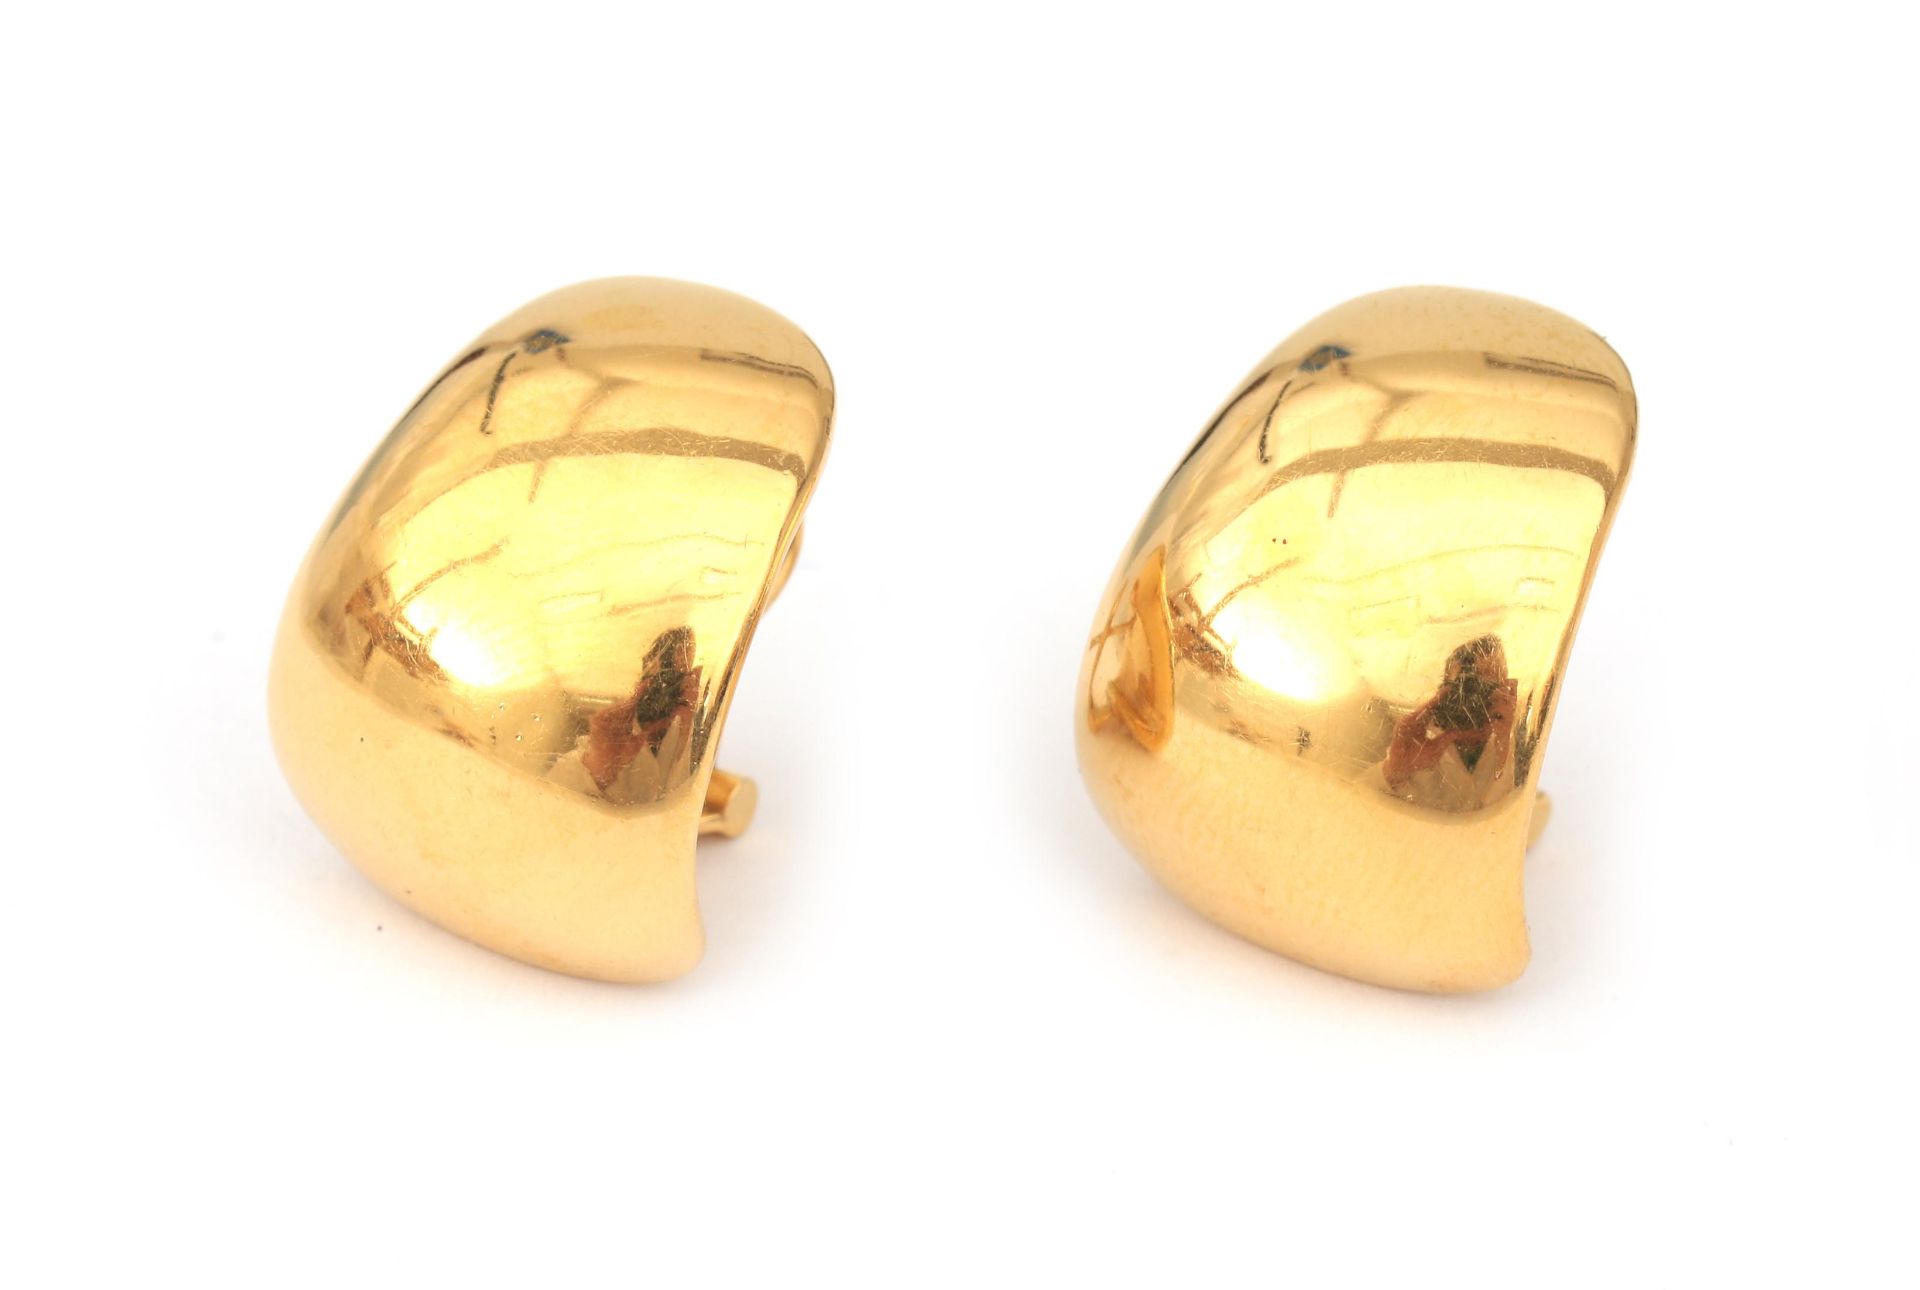 A pair of 14 karat gold earrings